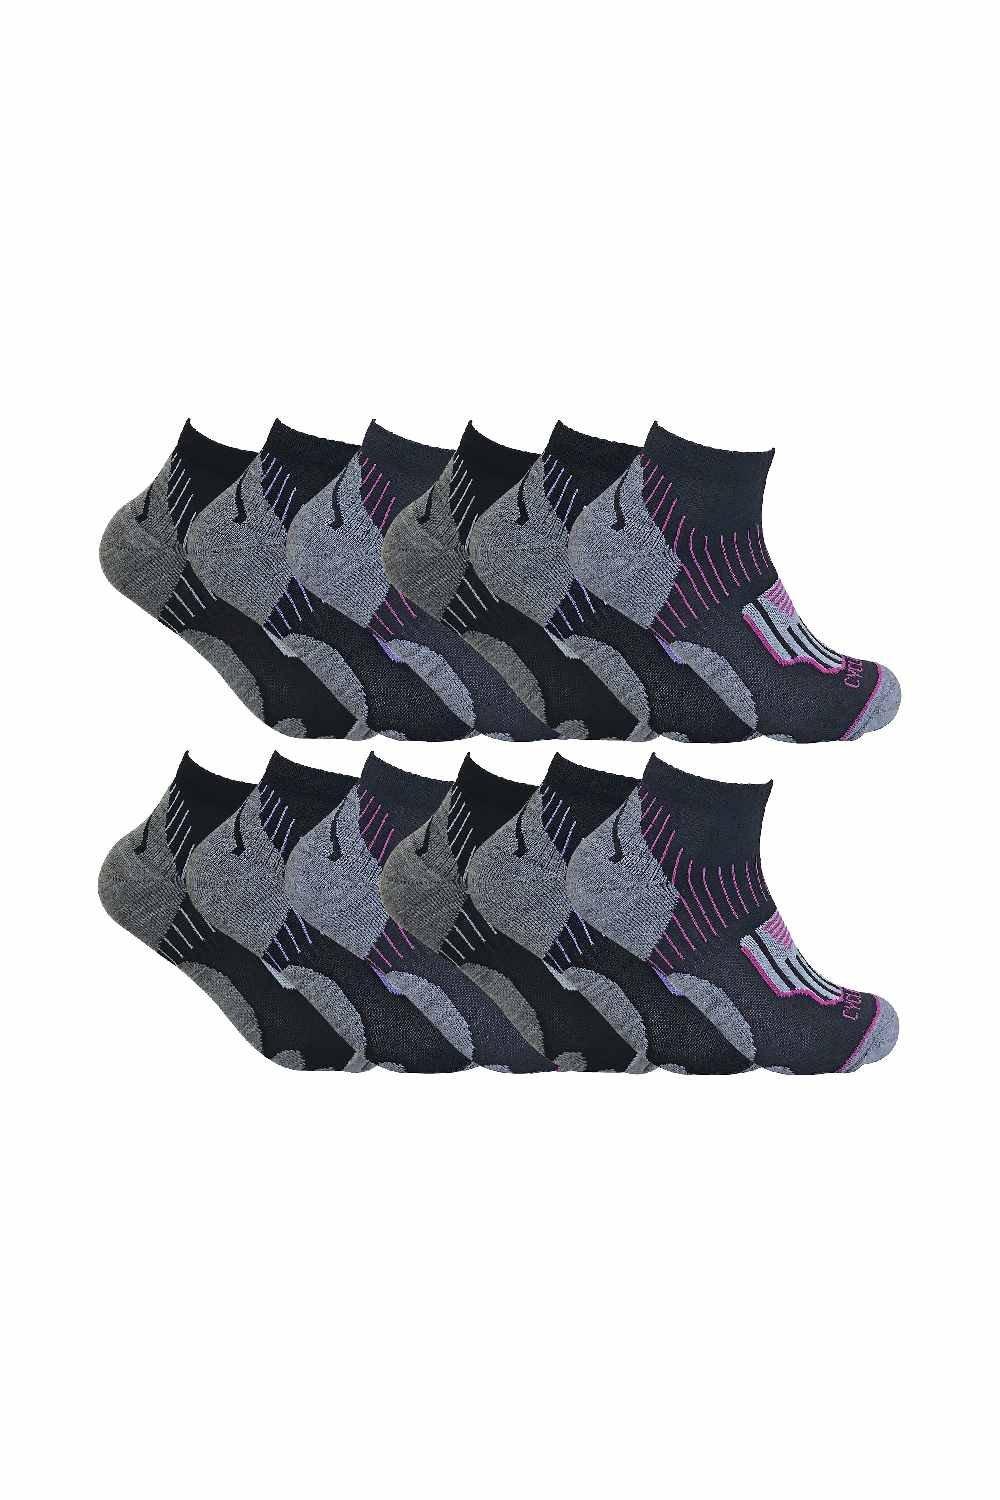 12 Pair Multipack Cycling Socks - Black Short Running Socks